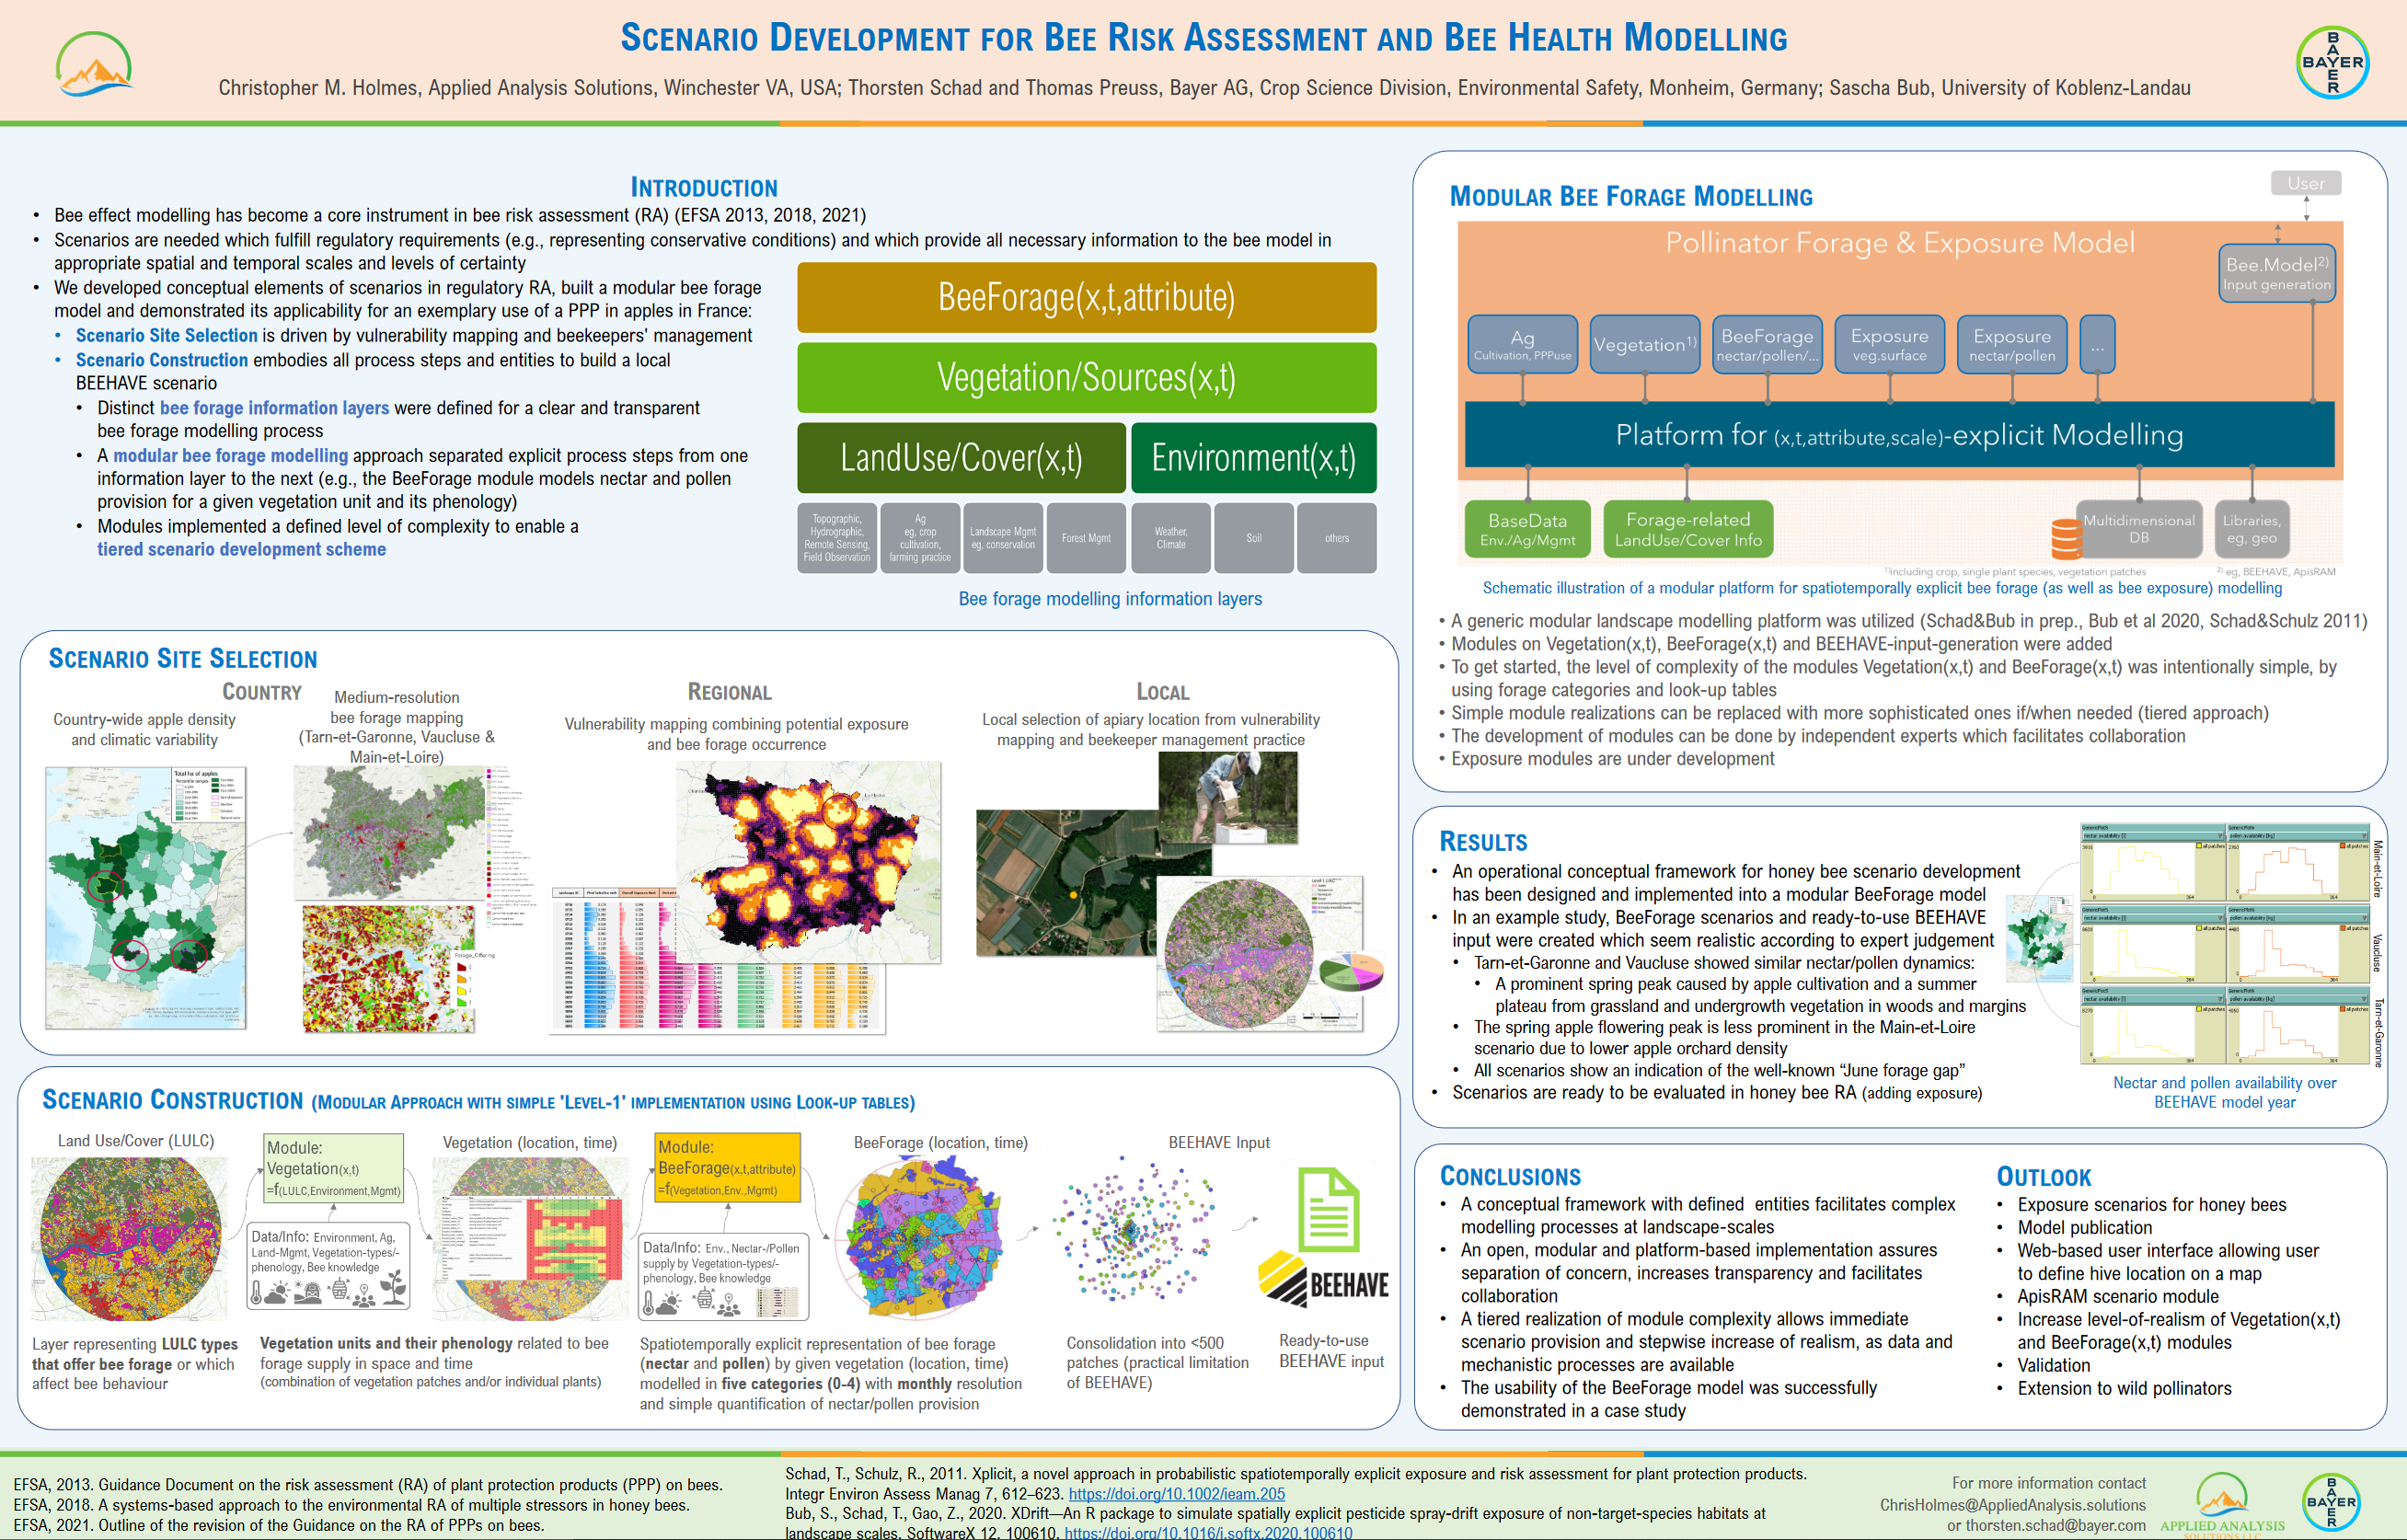 Scenario Development for Bee Risk Assessment and Health Modelling